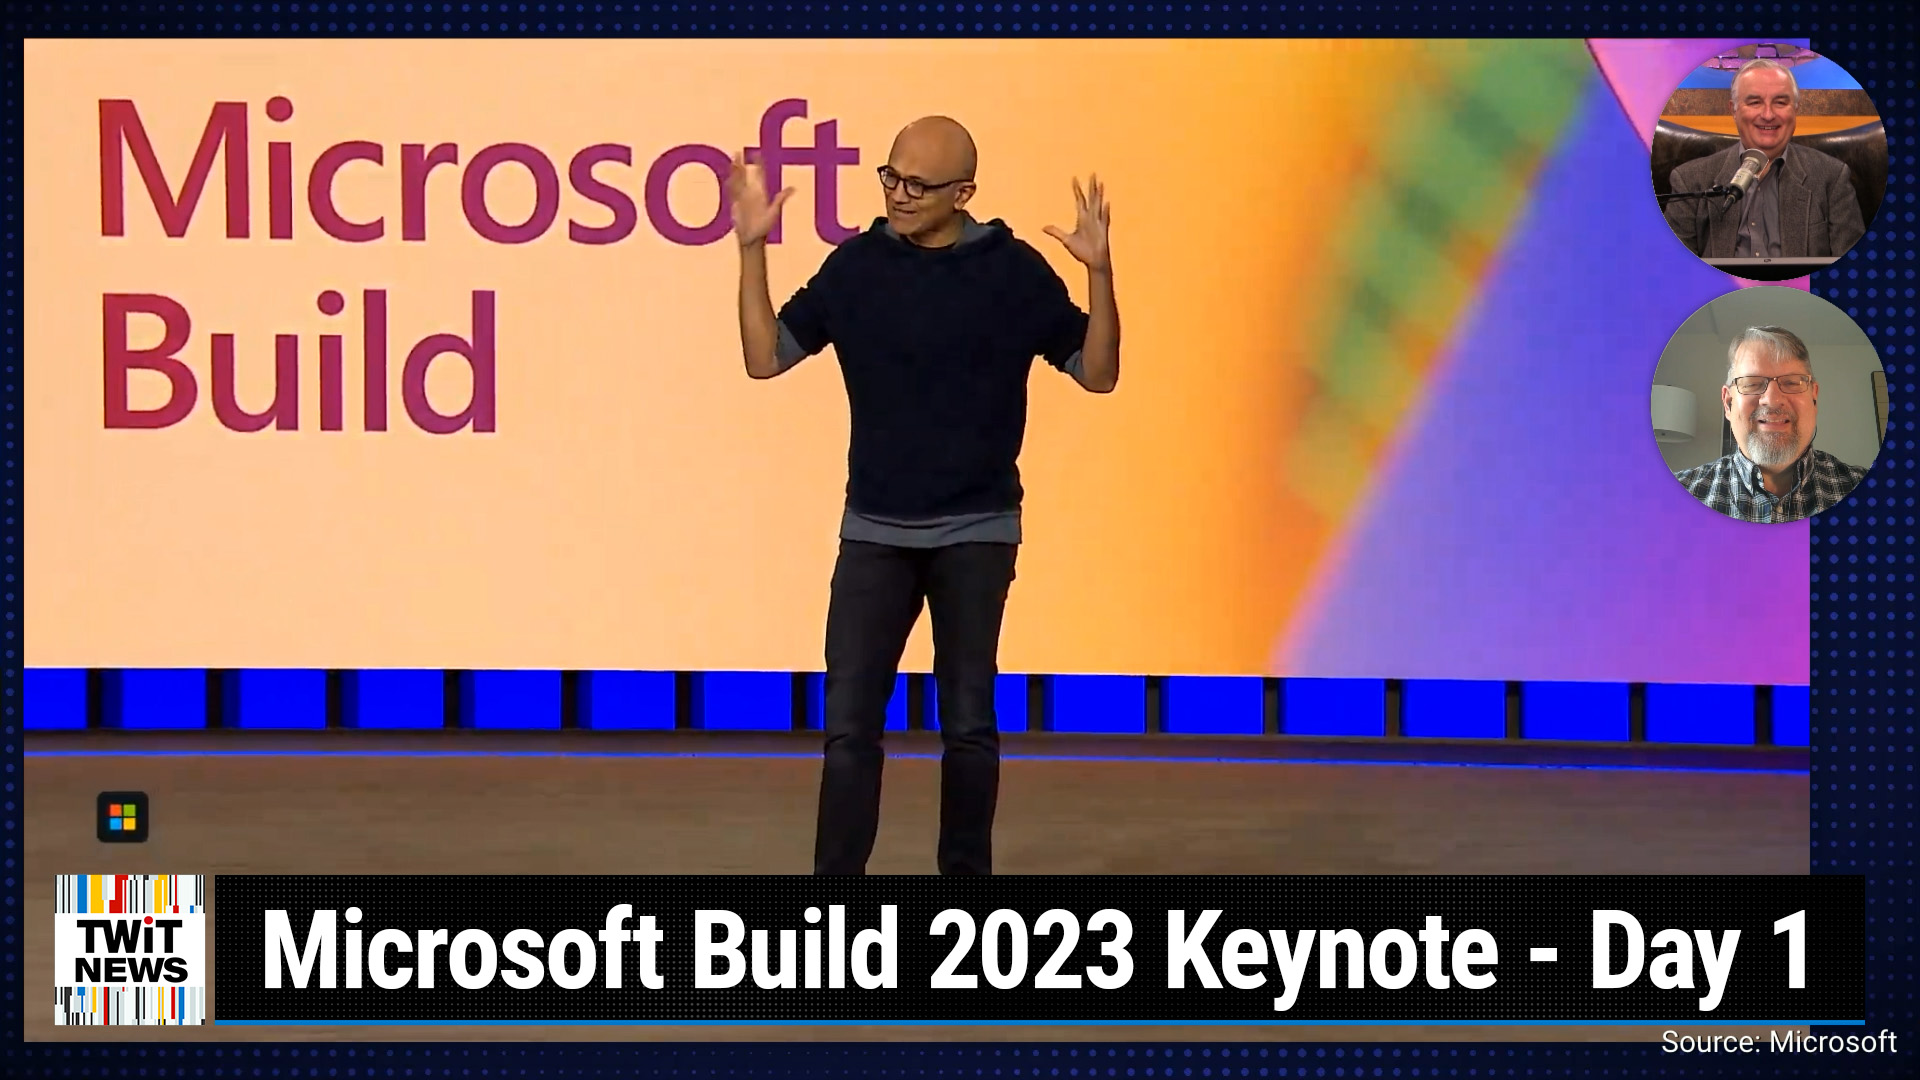 Microsoft Build 2023 Keynote Day 1